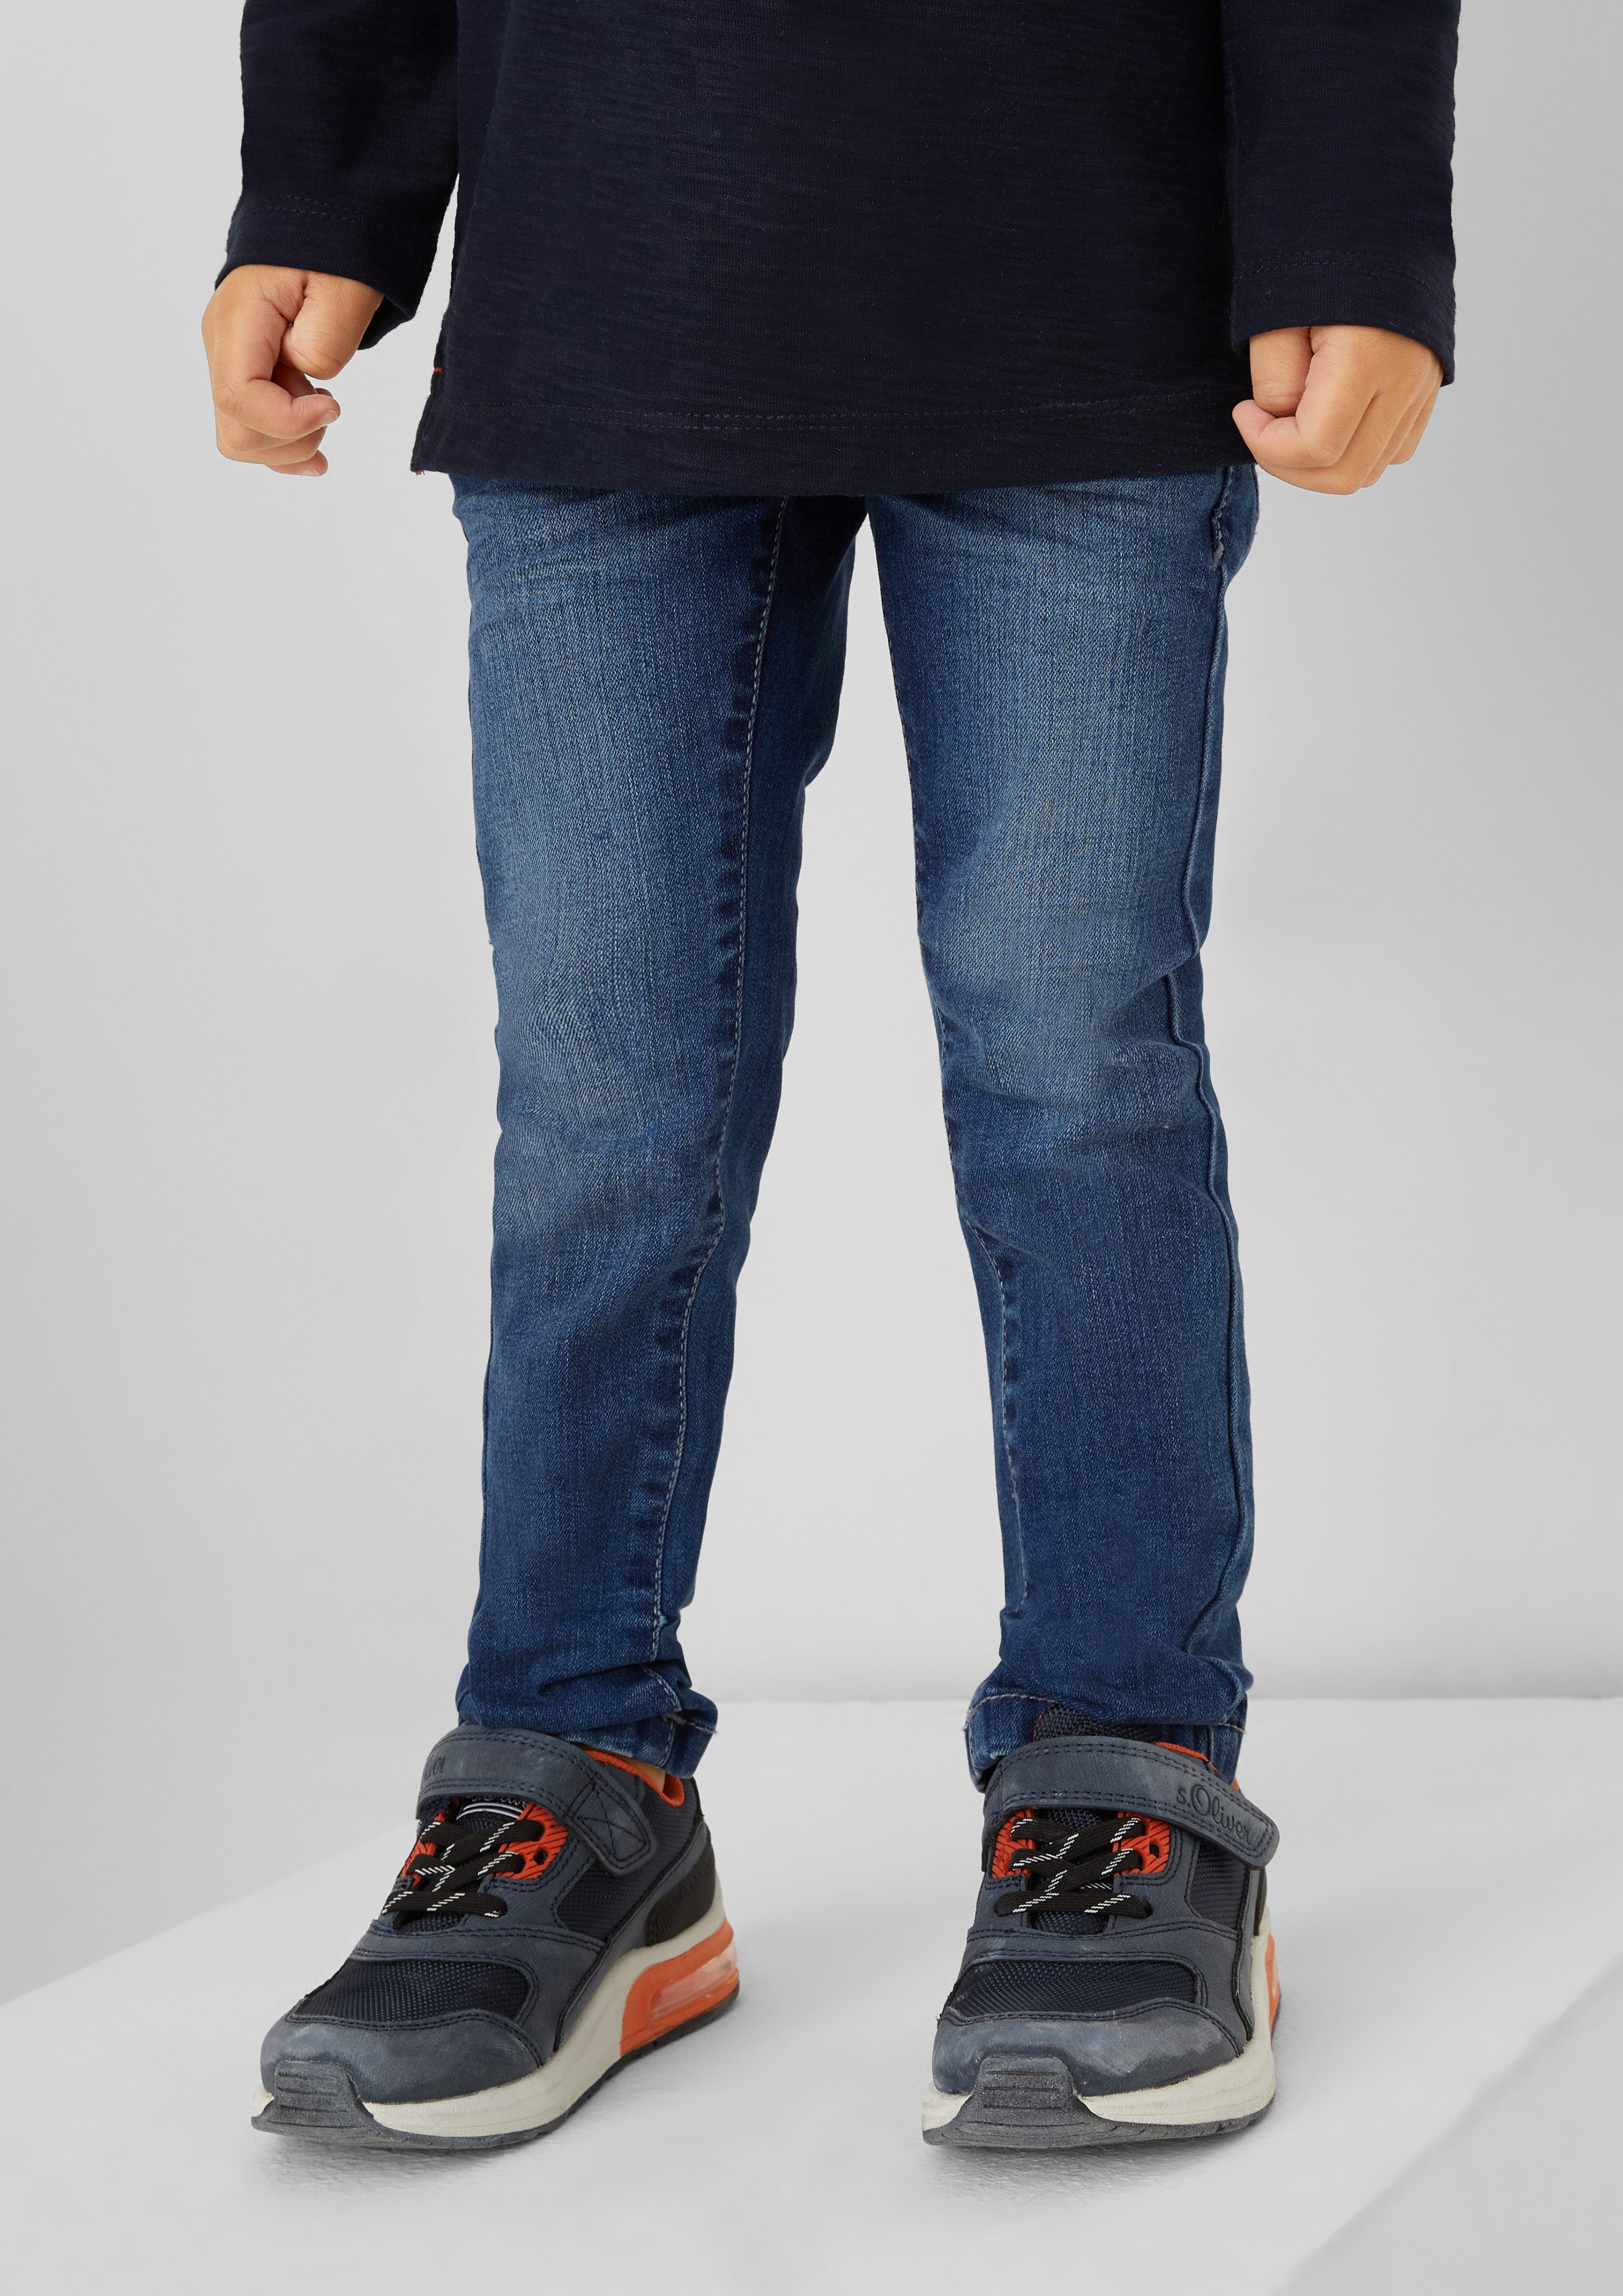 Jeans Slim Rise / / 5-Pocket-Jeans Brad Fit s.Oliver Waschung Leg Mid / Slim